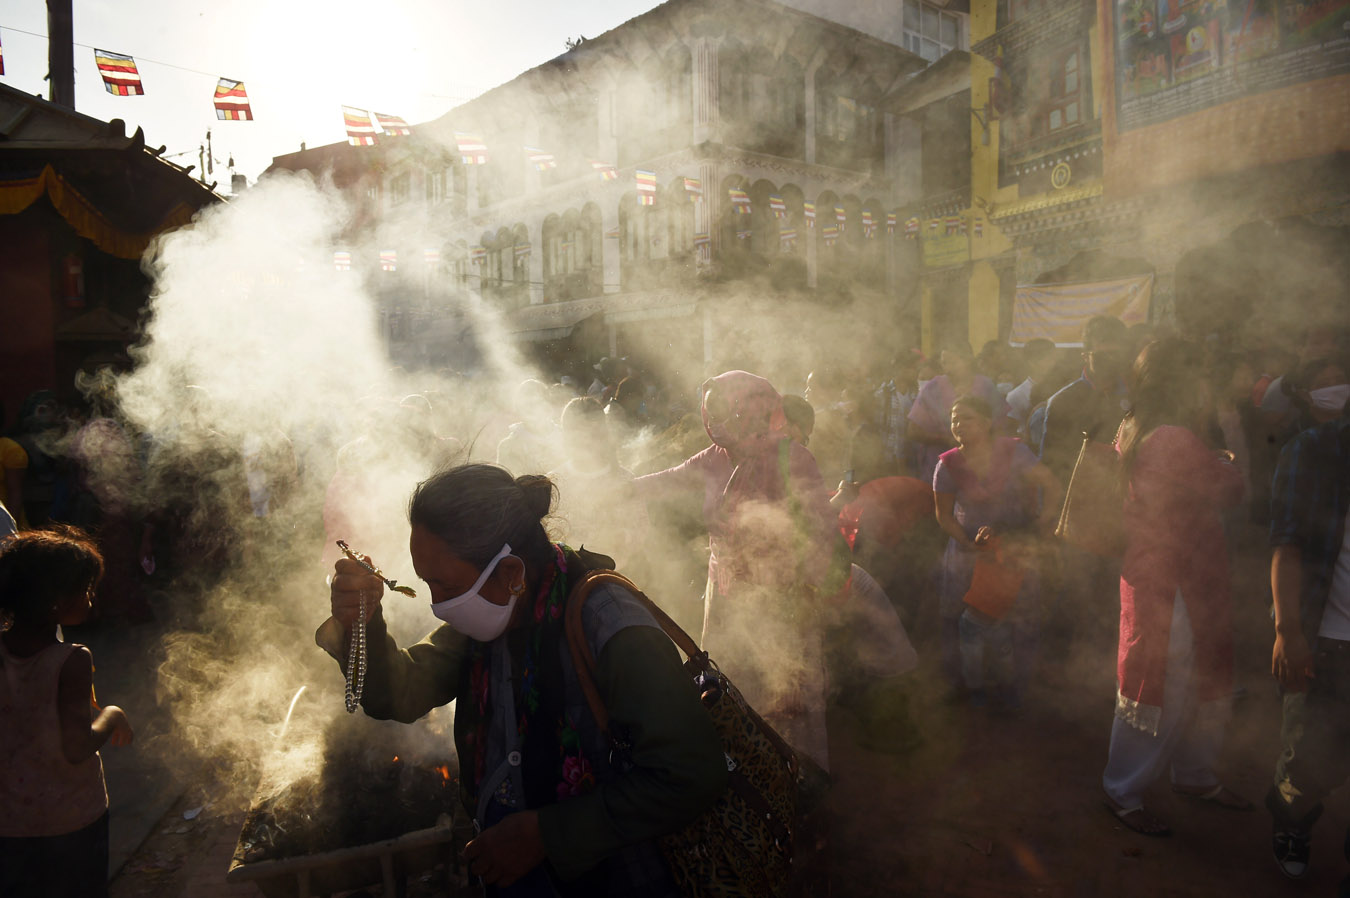 Smoke engulfs people as they celebrate Buddha Purnima which commemorates the birthday of Buddha near the Boudhanath stupa on Monday May 04, 2015 in Kathmandu, Nepal. Scores of people gathered for the festival near the historic stupa. (Photo by Matt McClain/ The Washington Post)